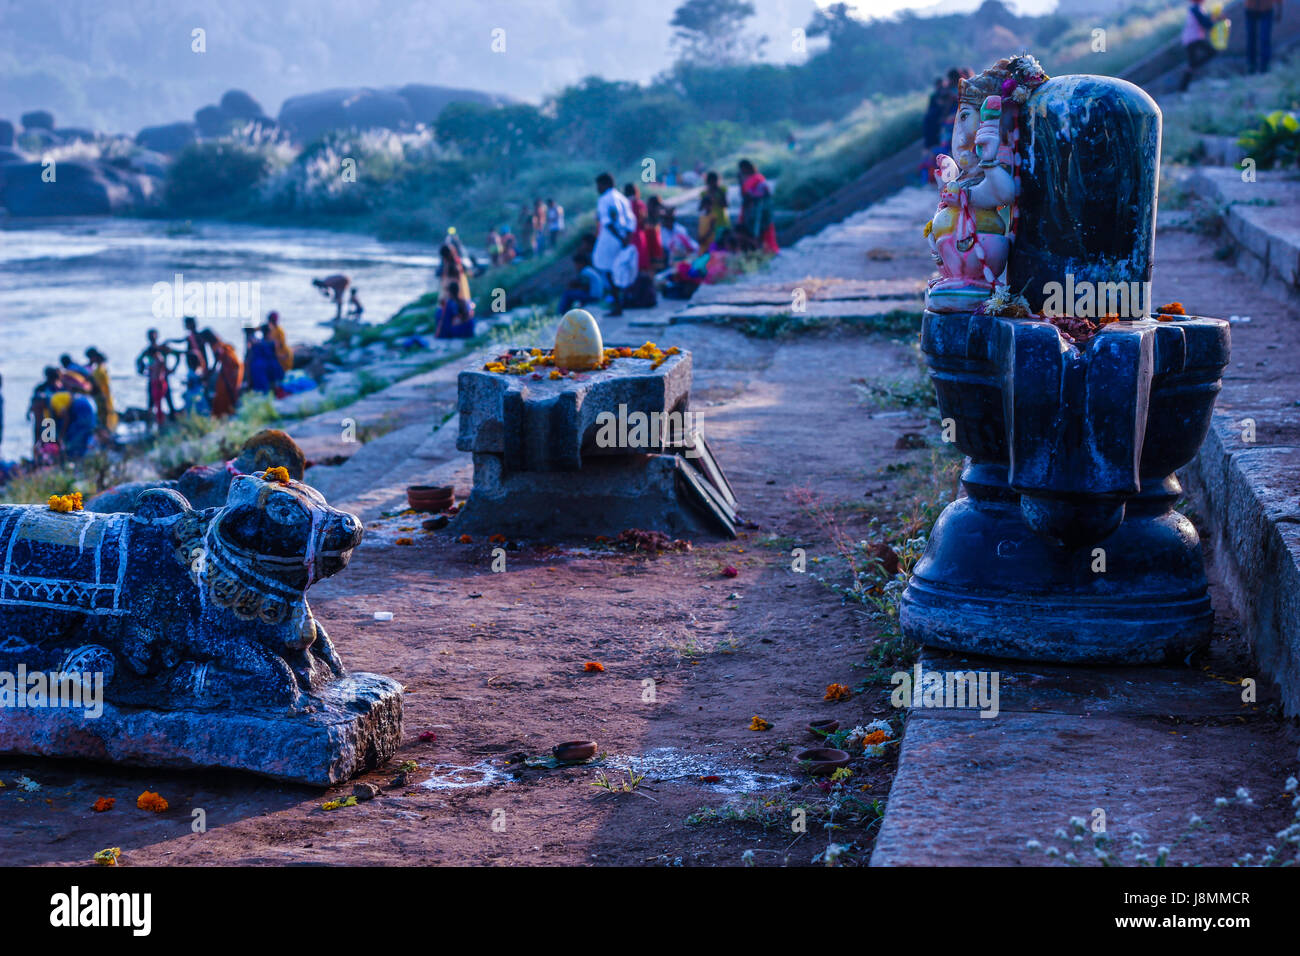 On the shores of Hampi, India Stock Photo